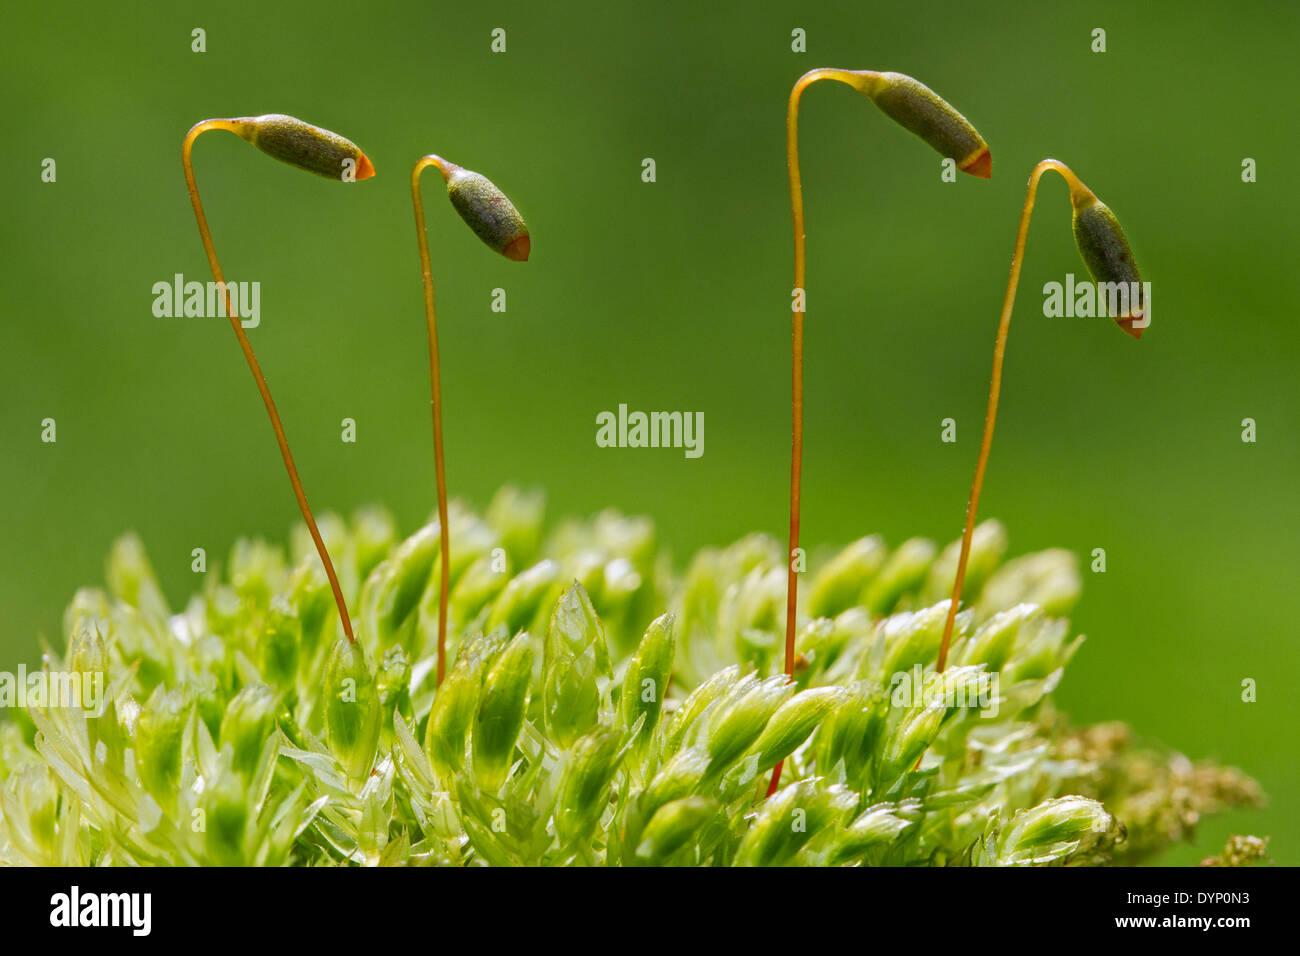 swans-neck-thyme-moss-horn-calcareous-moss-mnium-hornum-close-up-of-DYP0N3.jpg